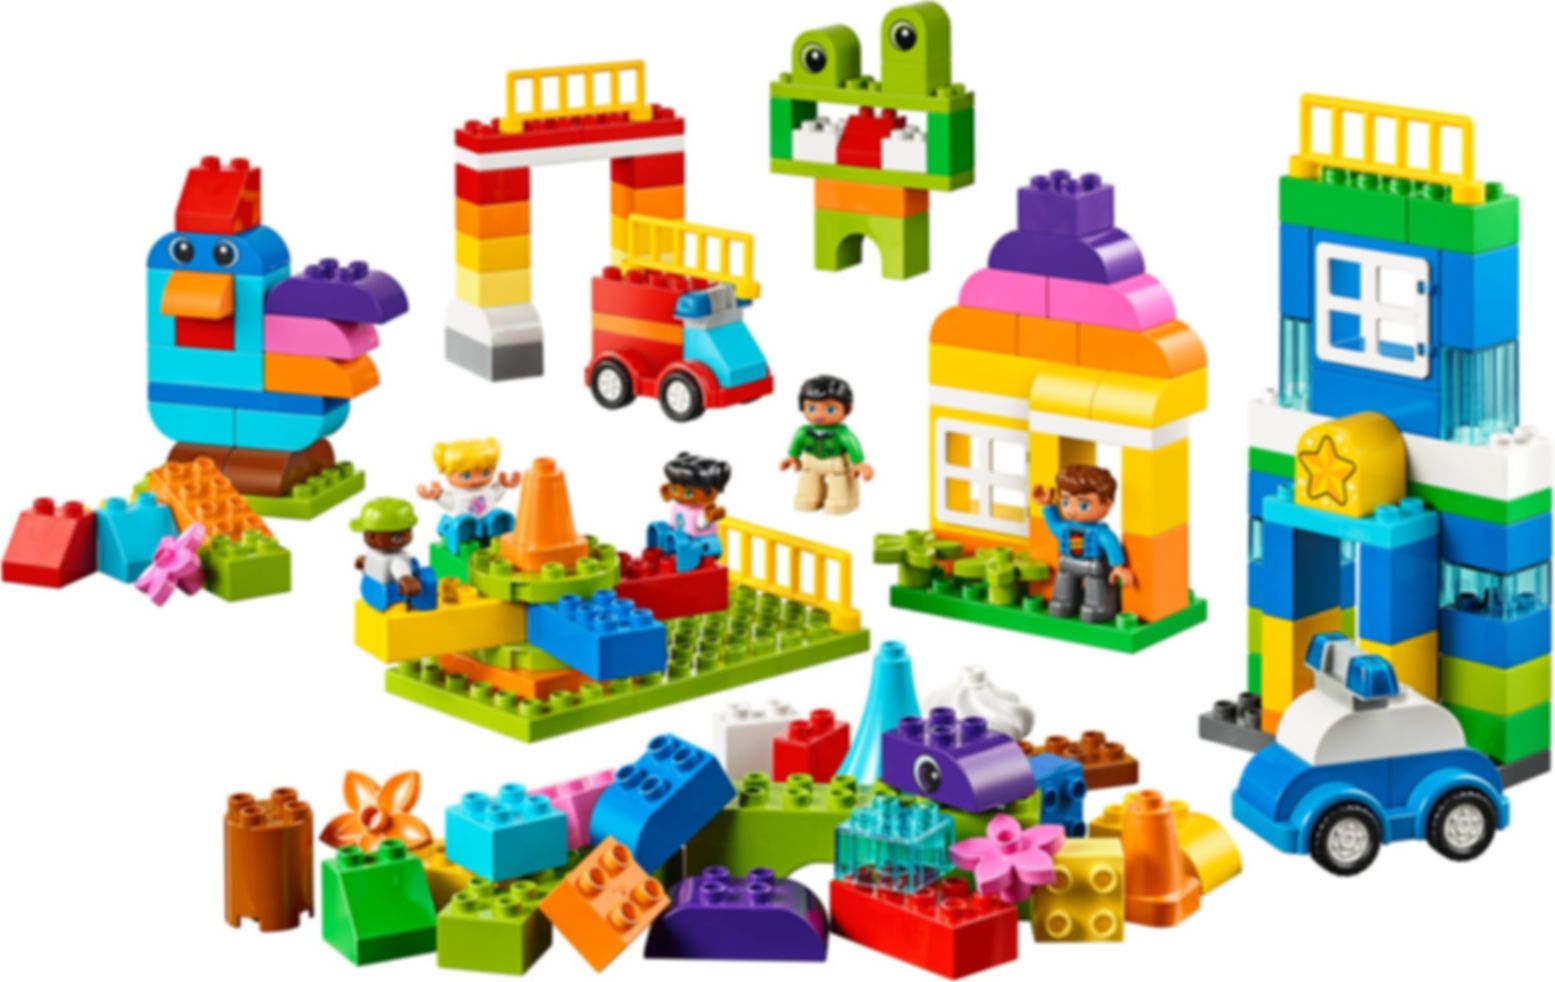 LEGO® Education Meine riesige Welt komponenten